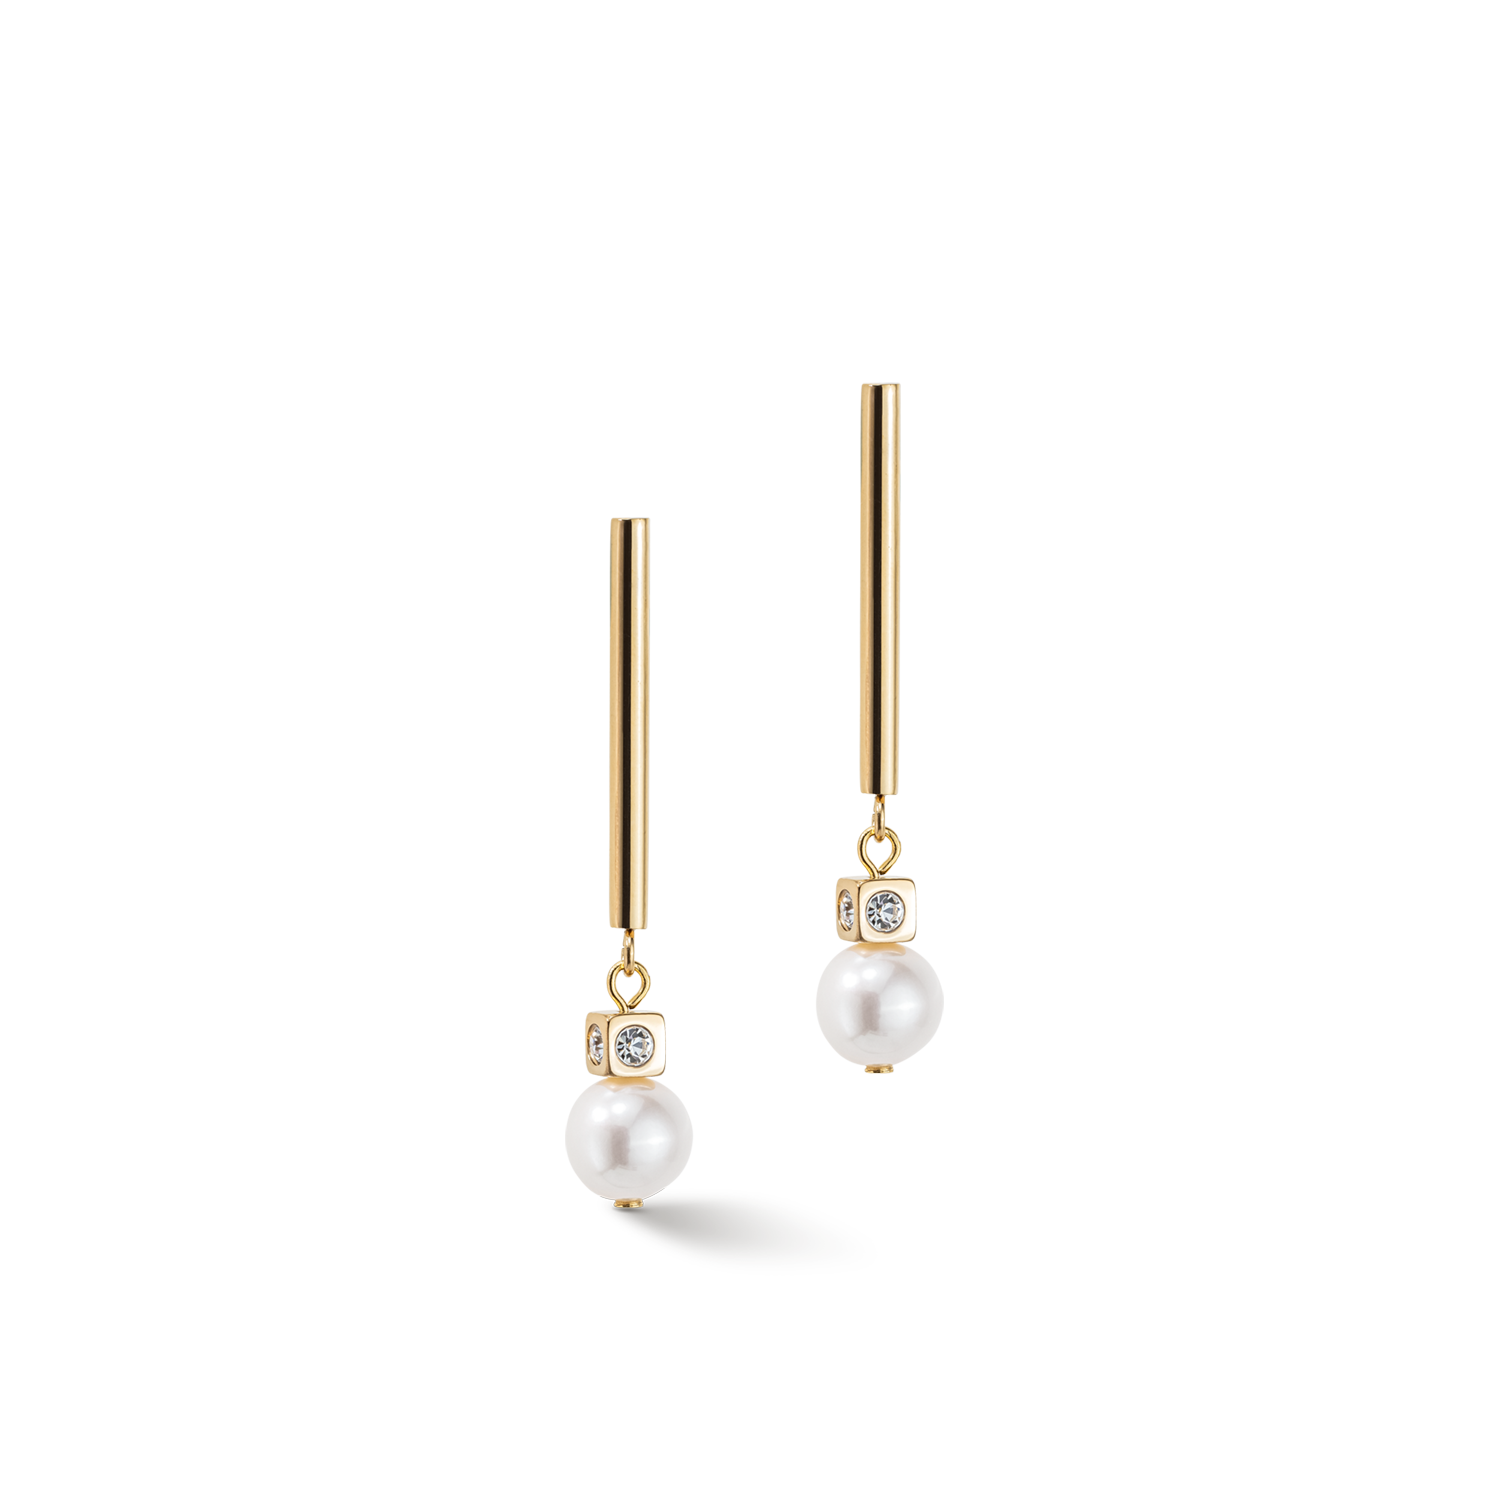 Earrings Asymmetry Freshwater Pearls & stainless steel white-gold